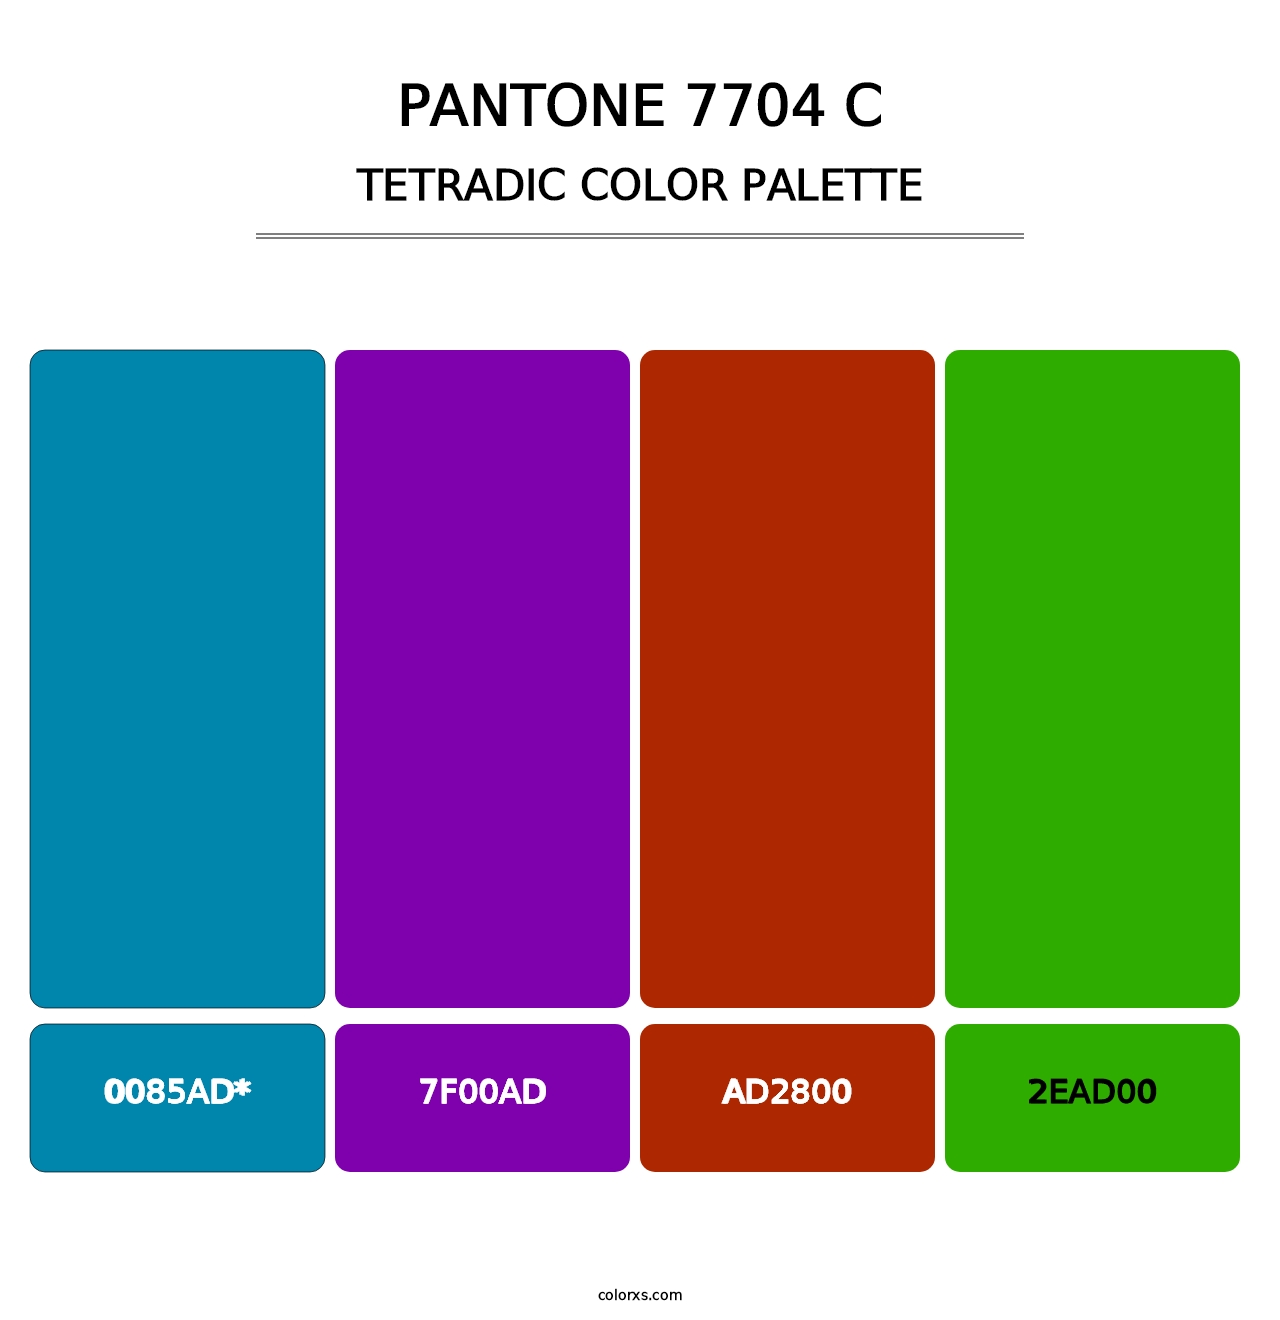 PANTONE 7704 C - Tetradic Color Palette